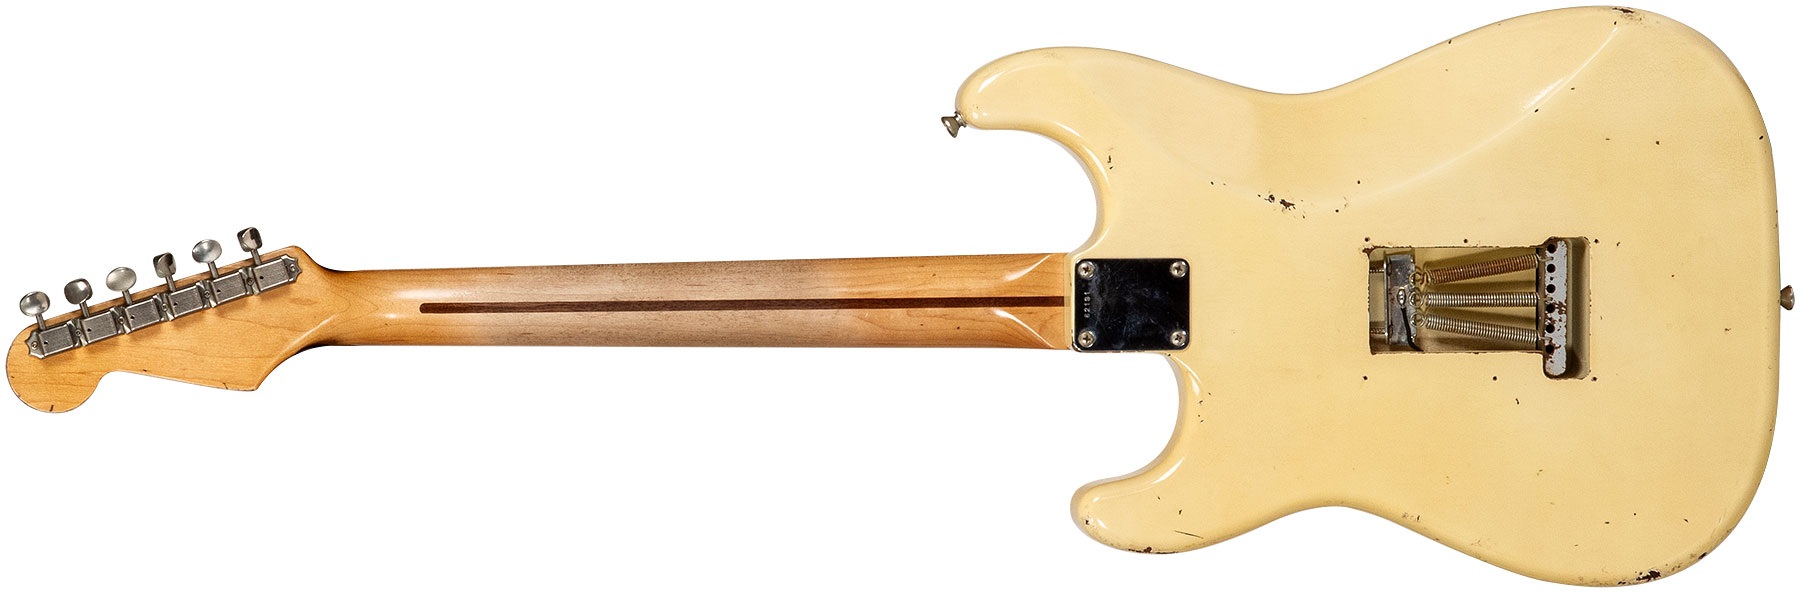 Rebelrelic S-series 55 3s Trem Mn #62191 - Light Aged Banana - Str shape electric guitar - Variation 1